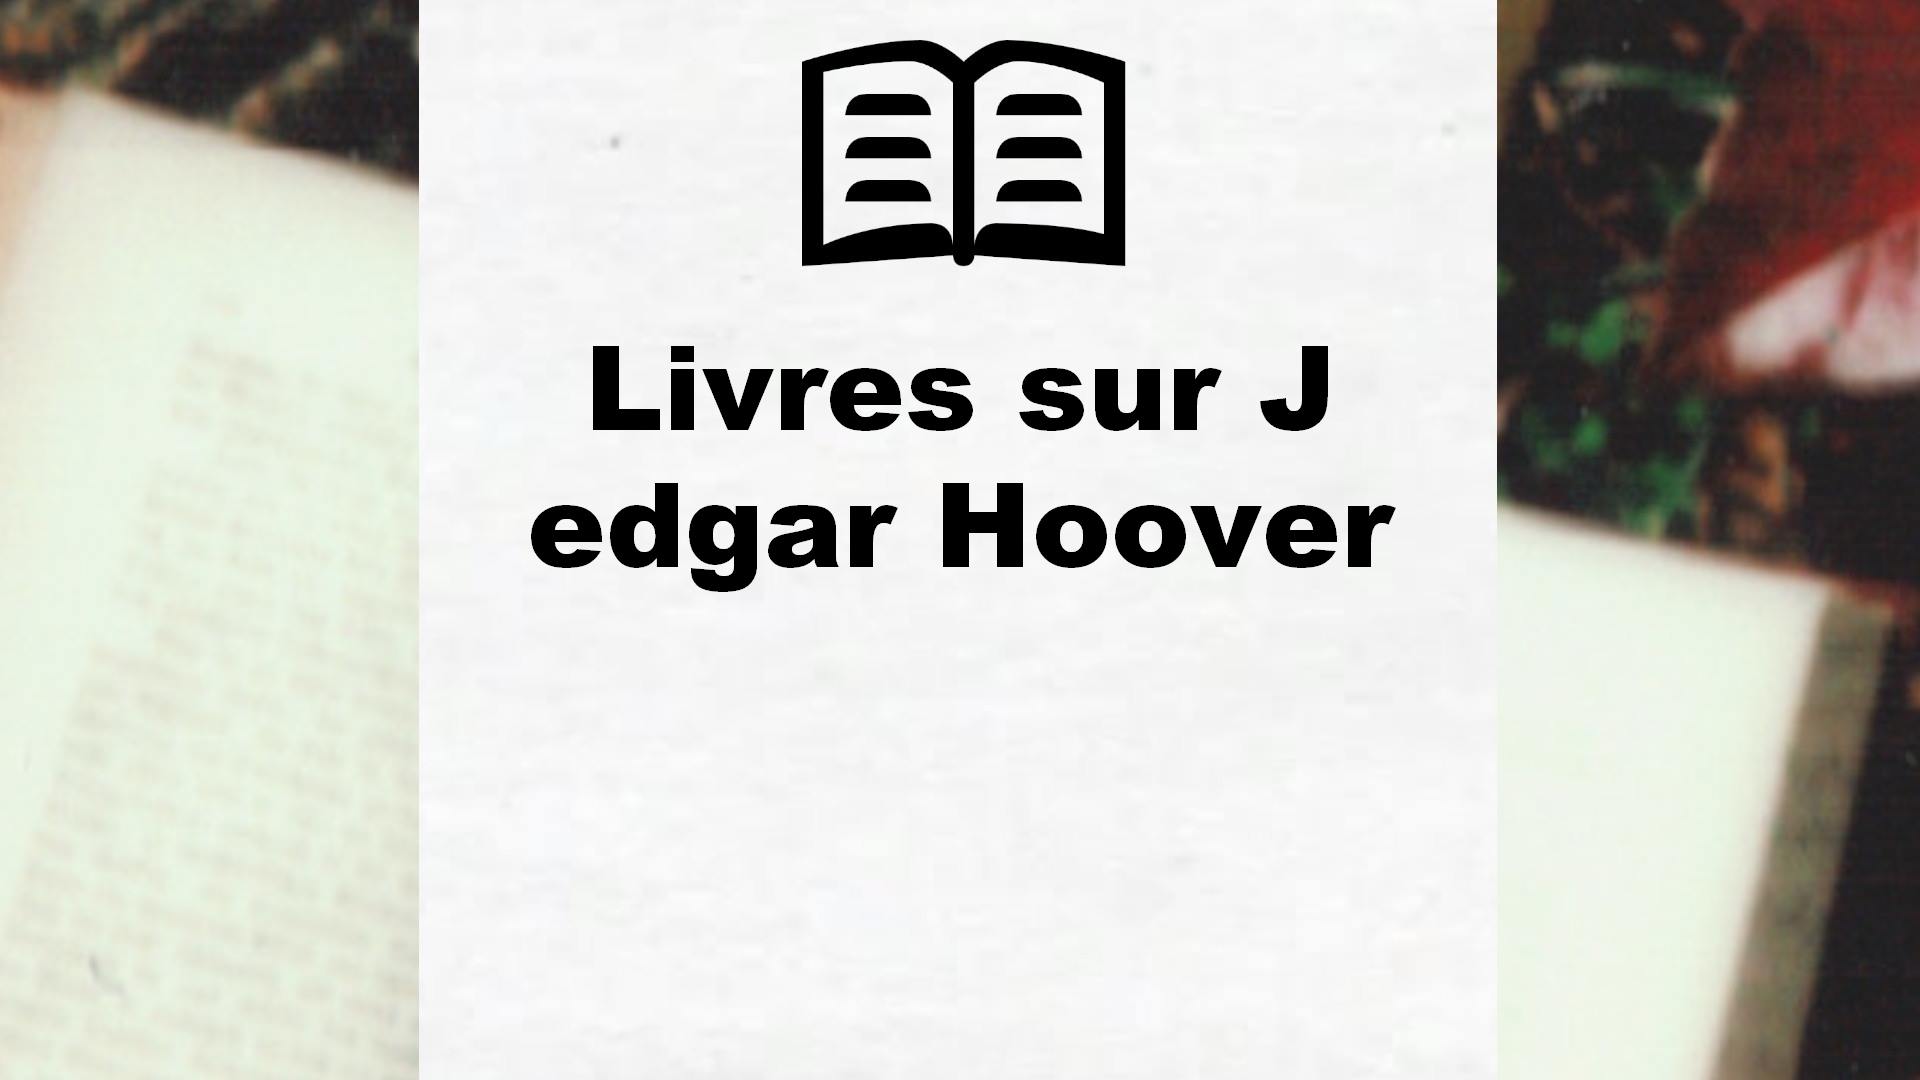 Livres sur J edgar Hoover